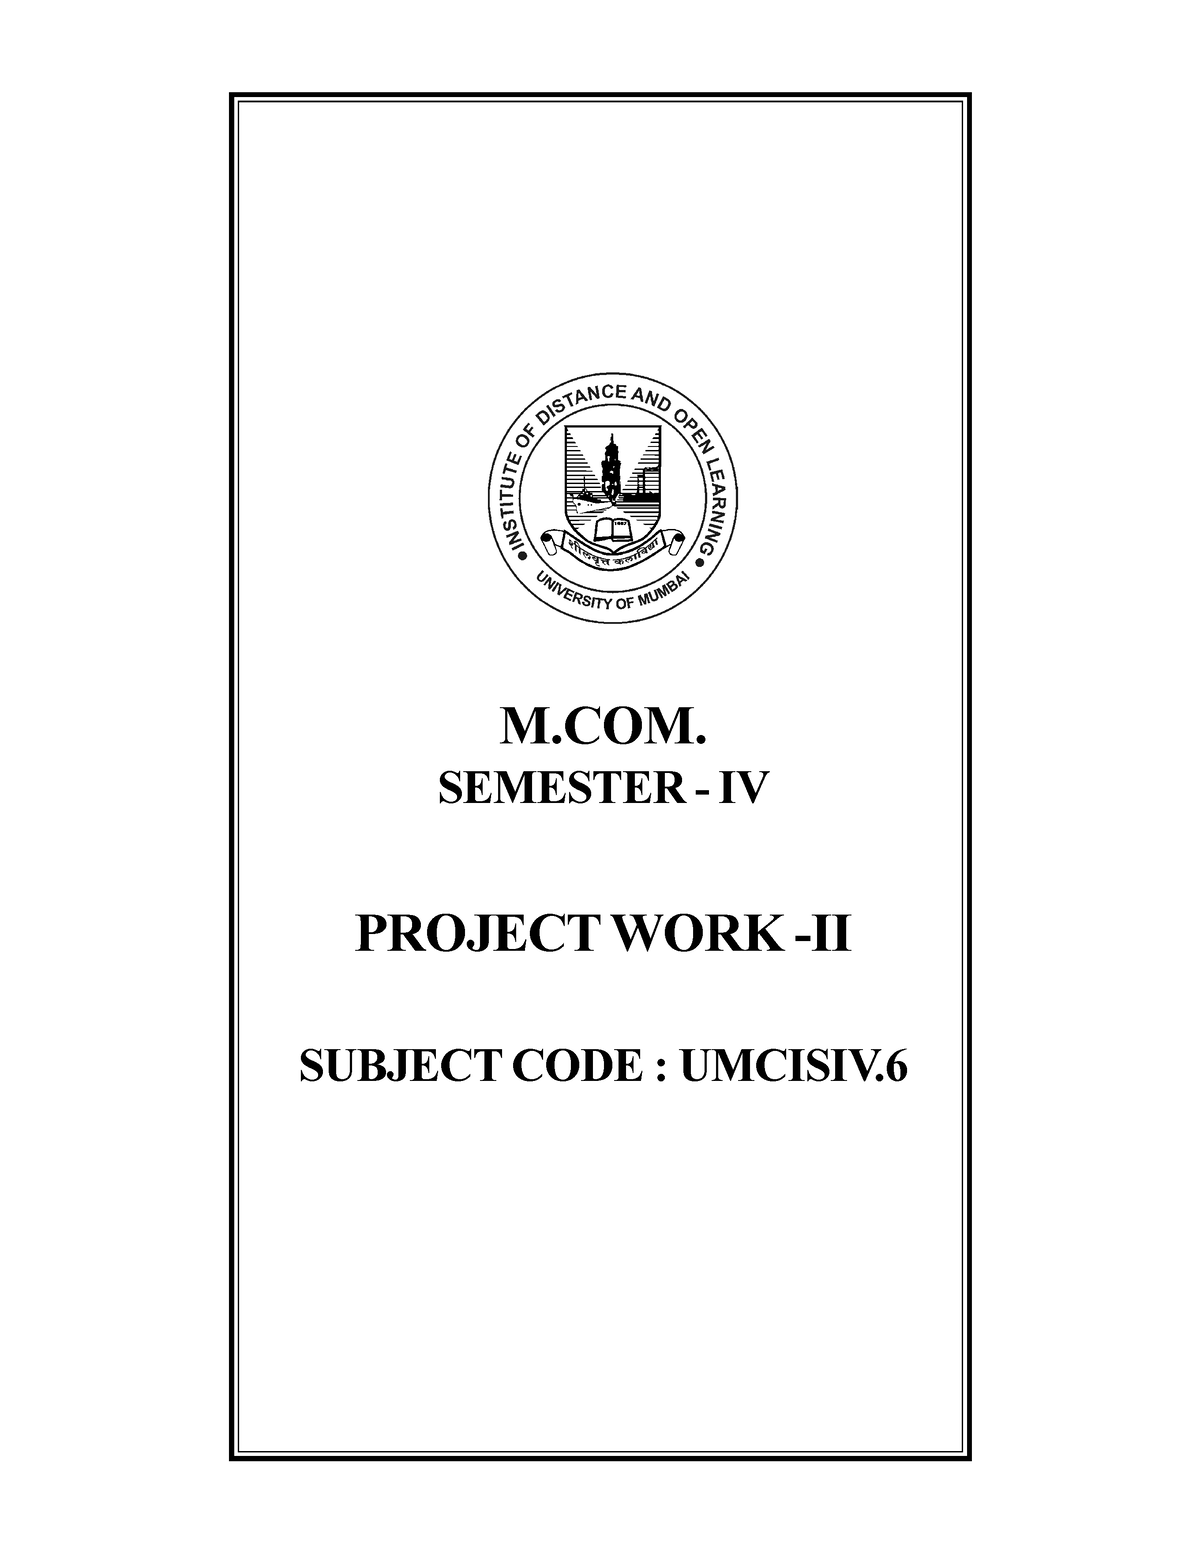 Project-II - Mcom part 2 - M. SEMESTER - IV PROJECT WORK -II SUBJECT ...